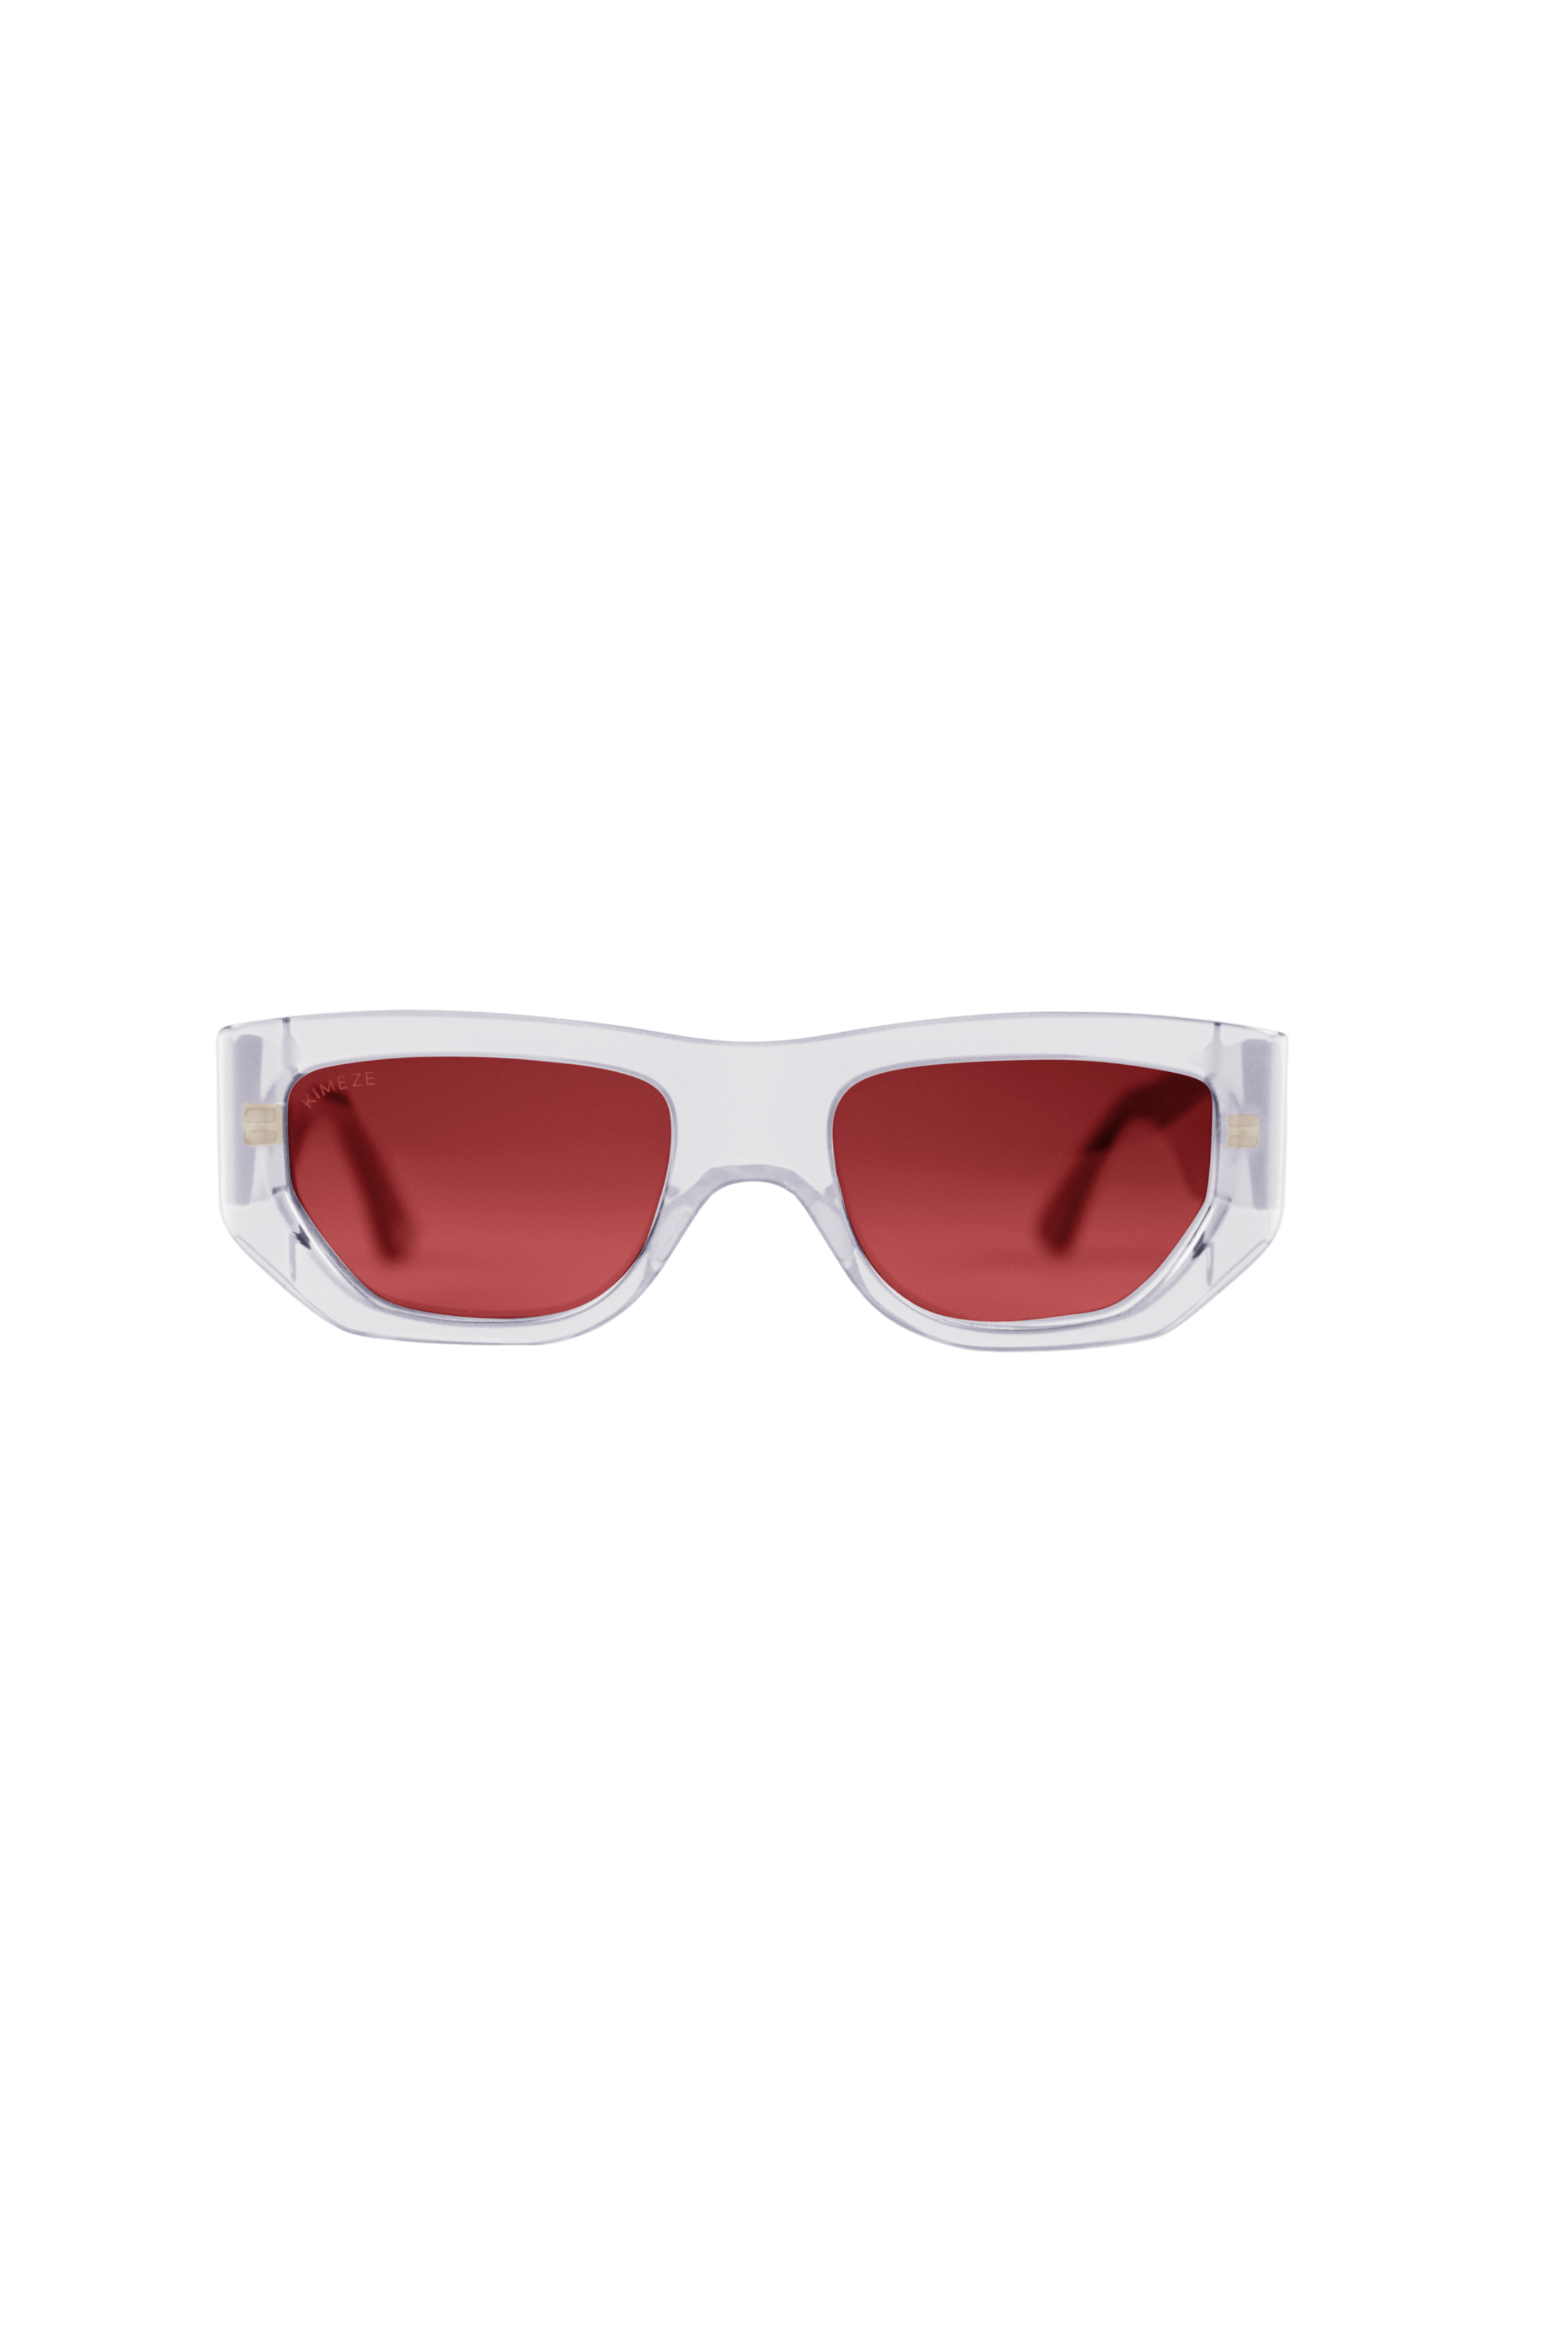 KIMEZE Concept 1 Red Lens Sunglasses